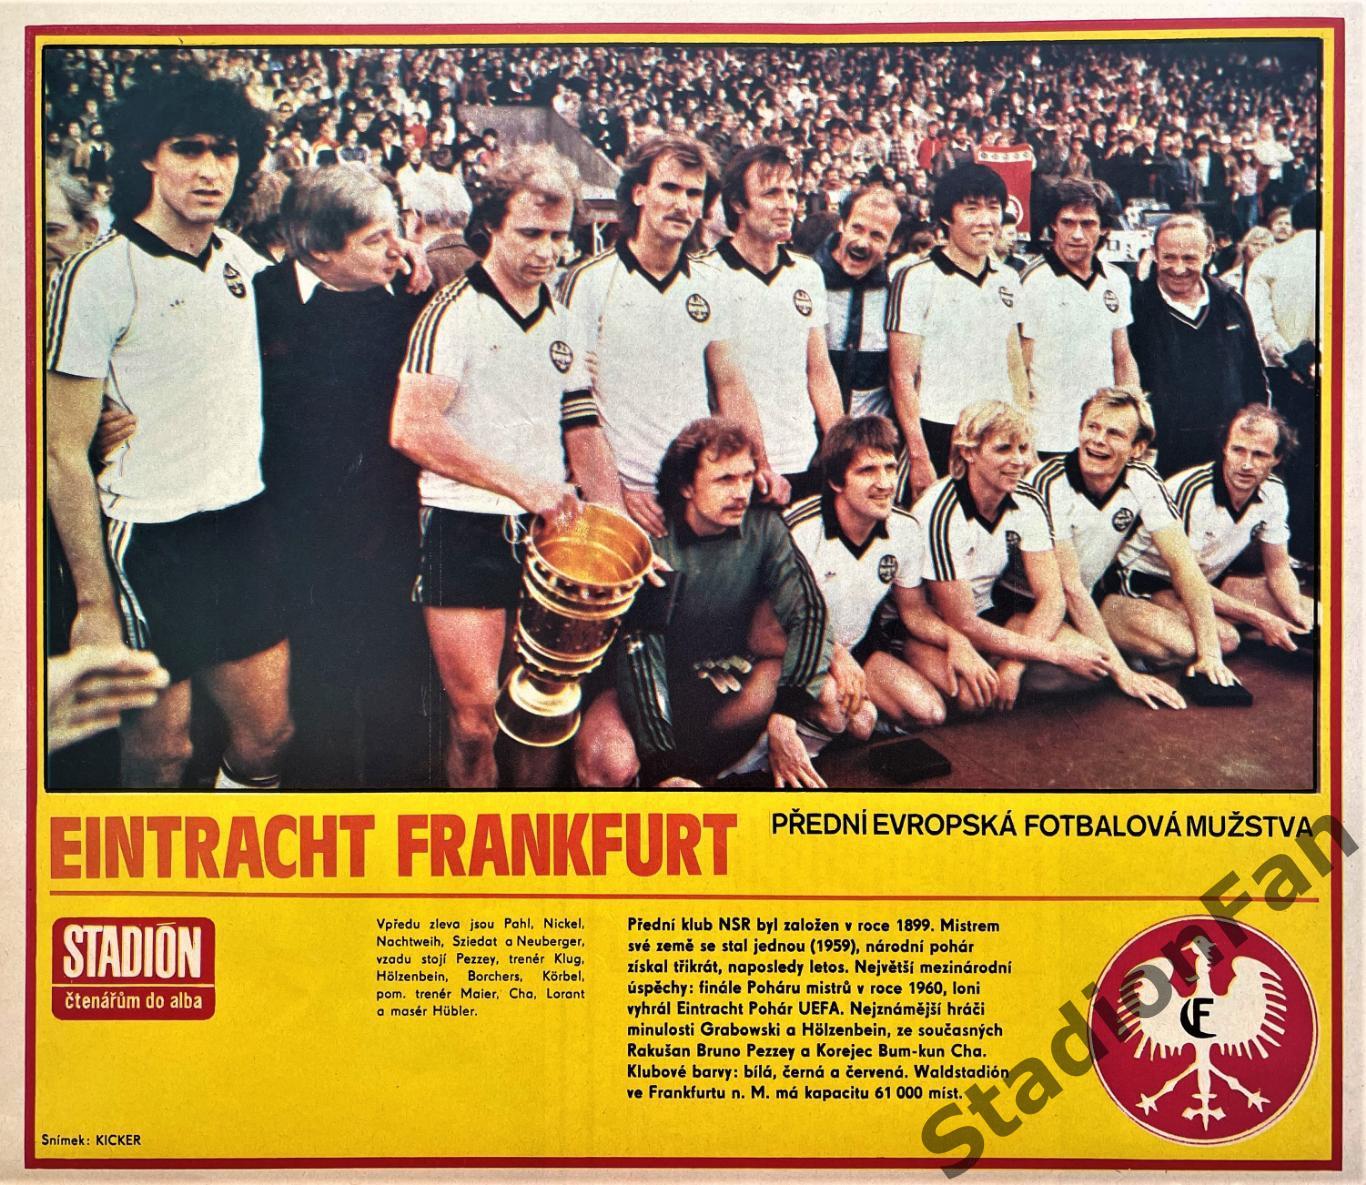 Постер из журнала Стадион (Stadion) - Eintracht Frankfurt, 1981.